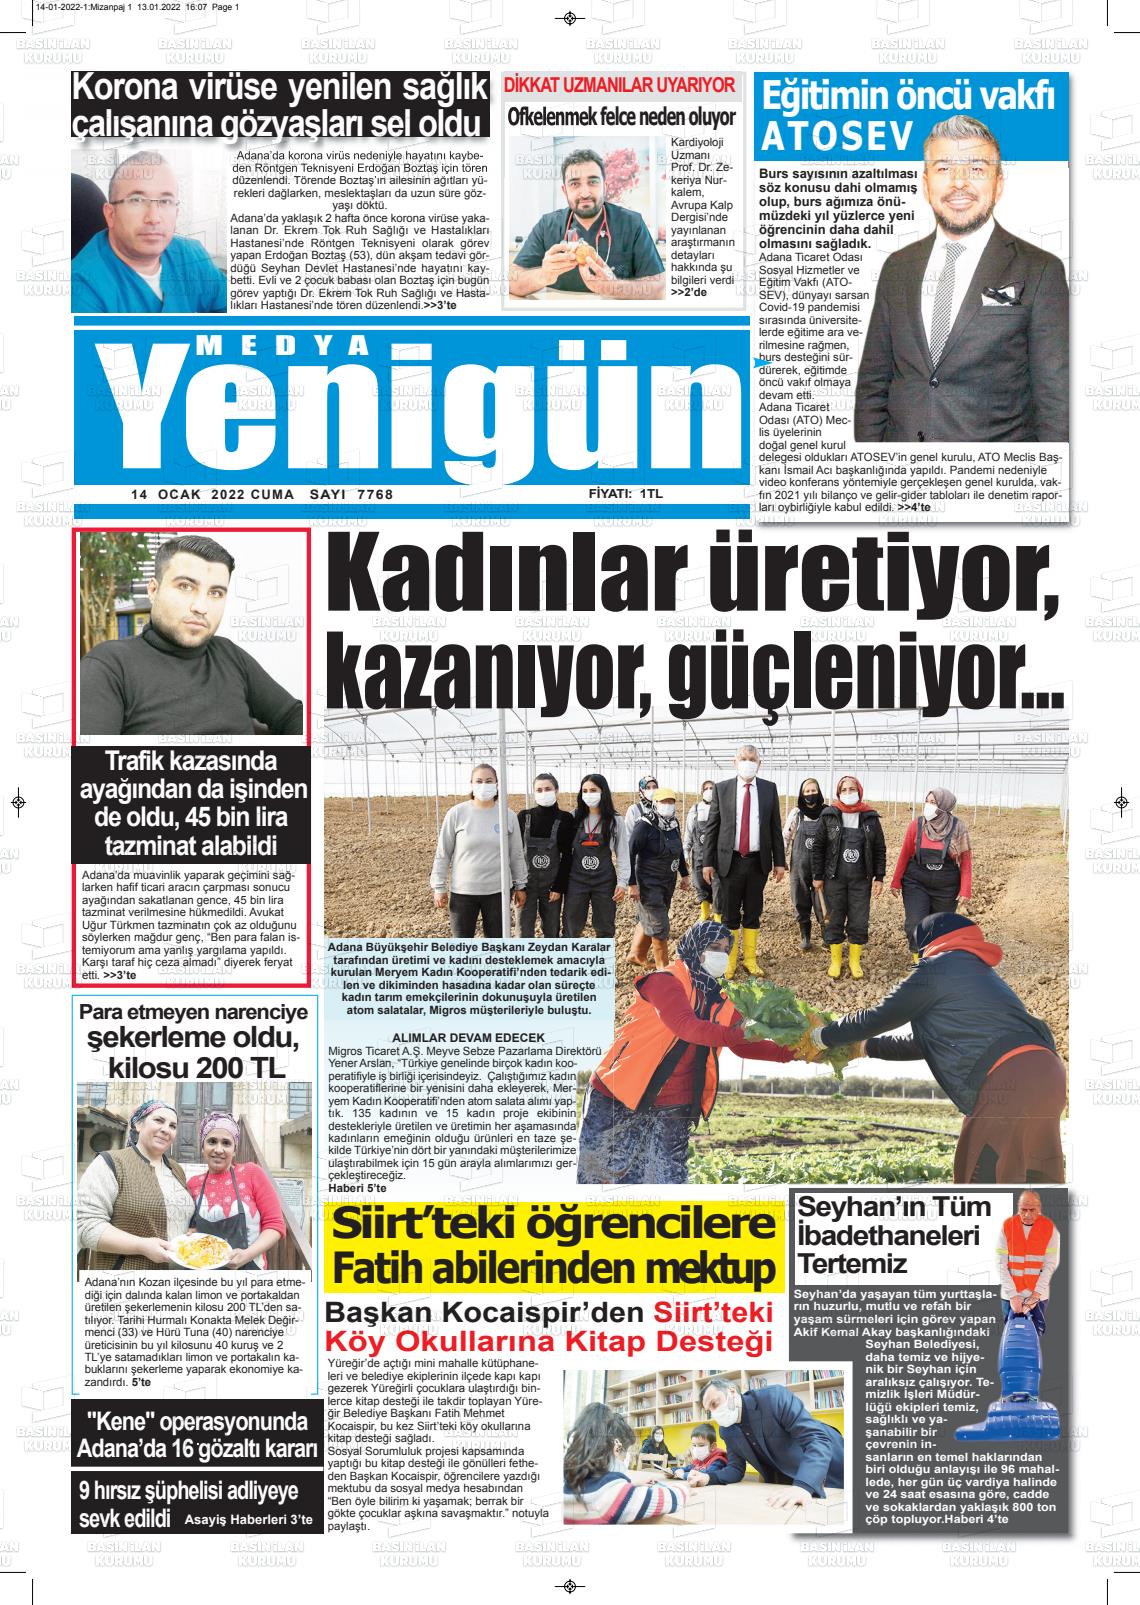 14 Ocak 2022 Medya Yenigün Gazete Manşeti